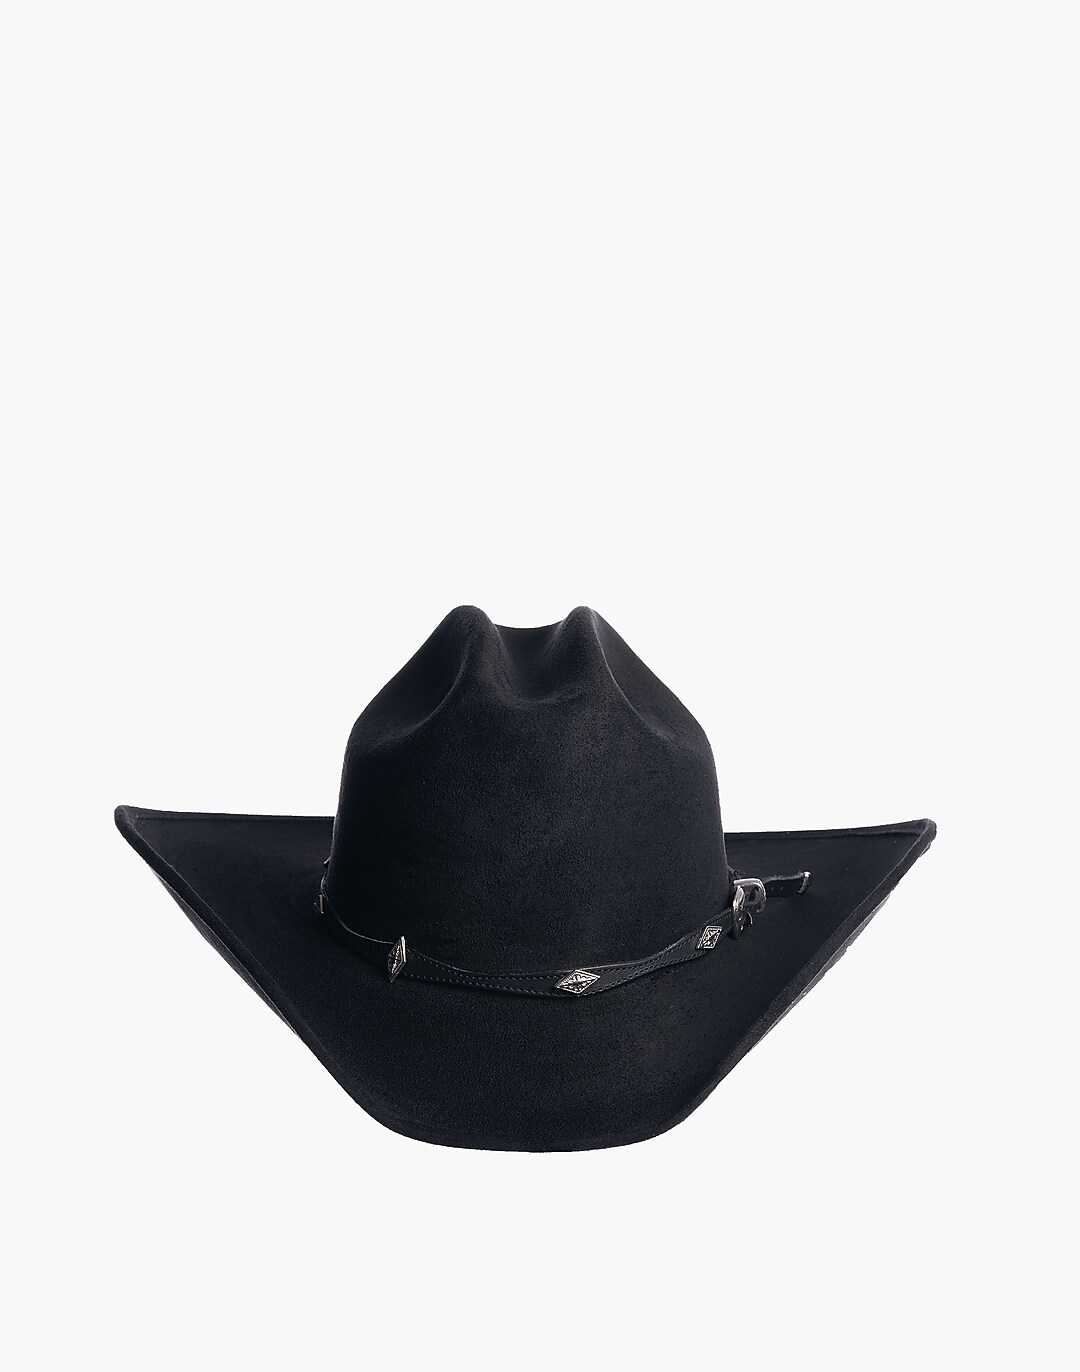 The Dolly - 100% Wool Hat | Black Felt Cowboy Hat M/L (59) / Black